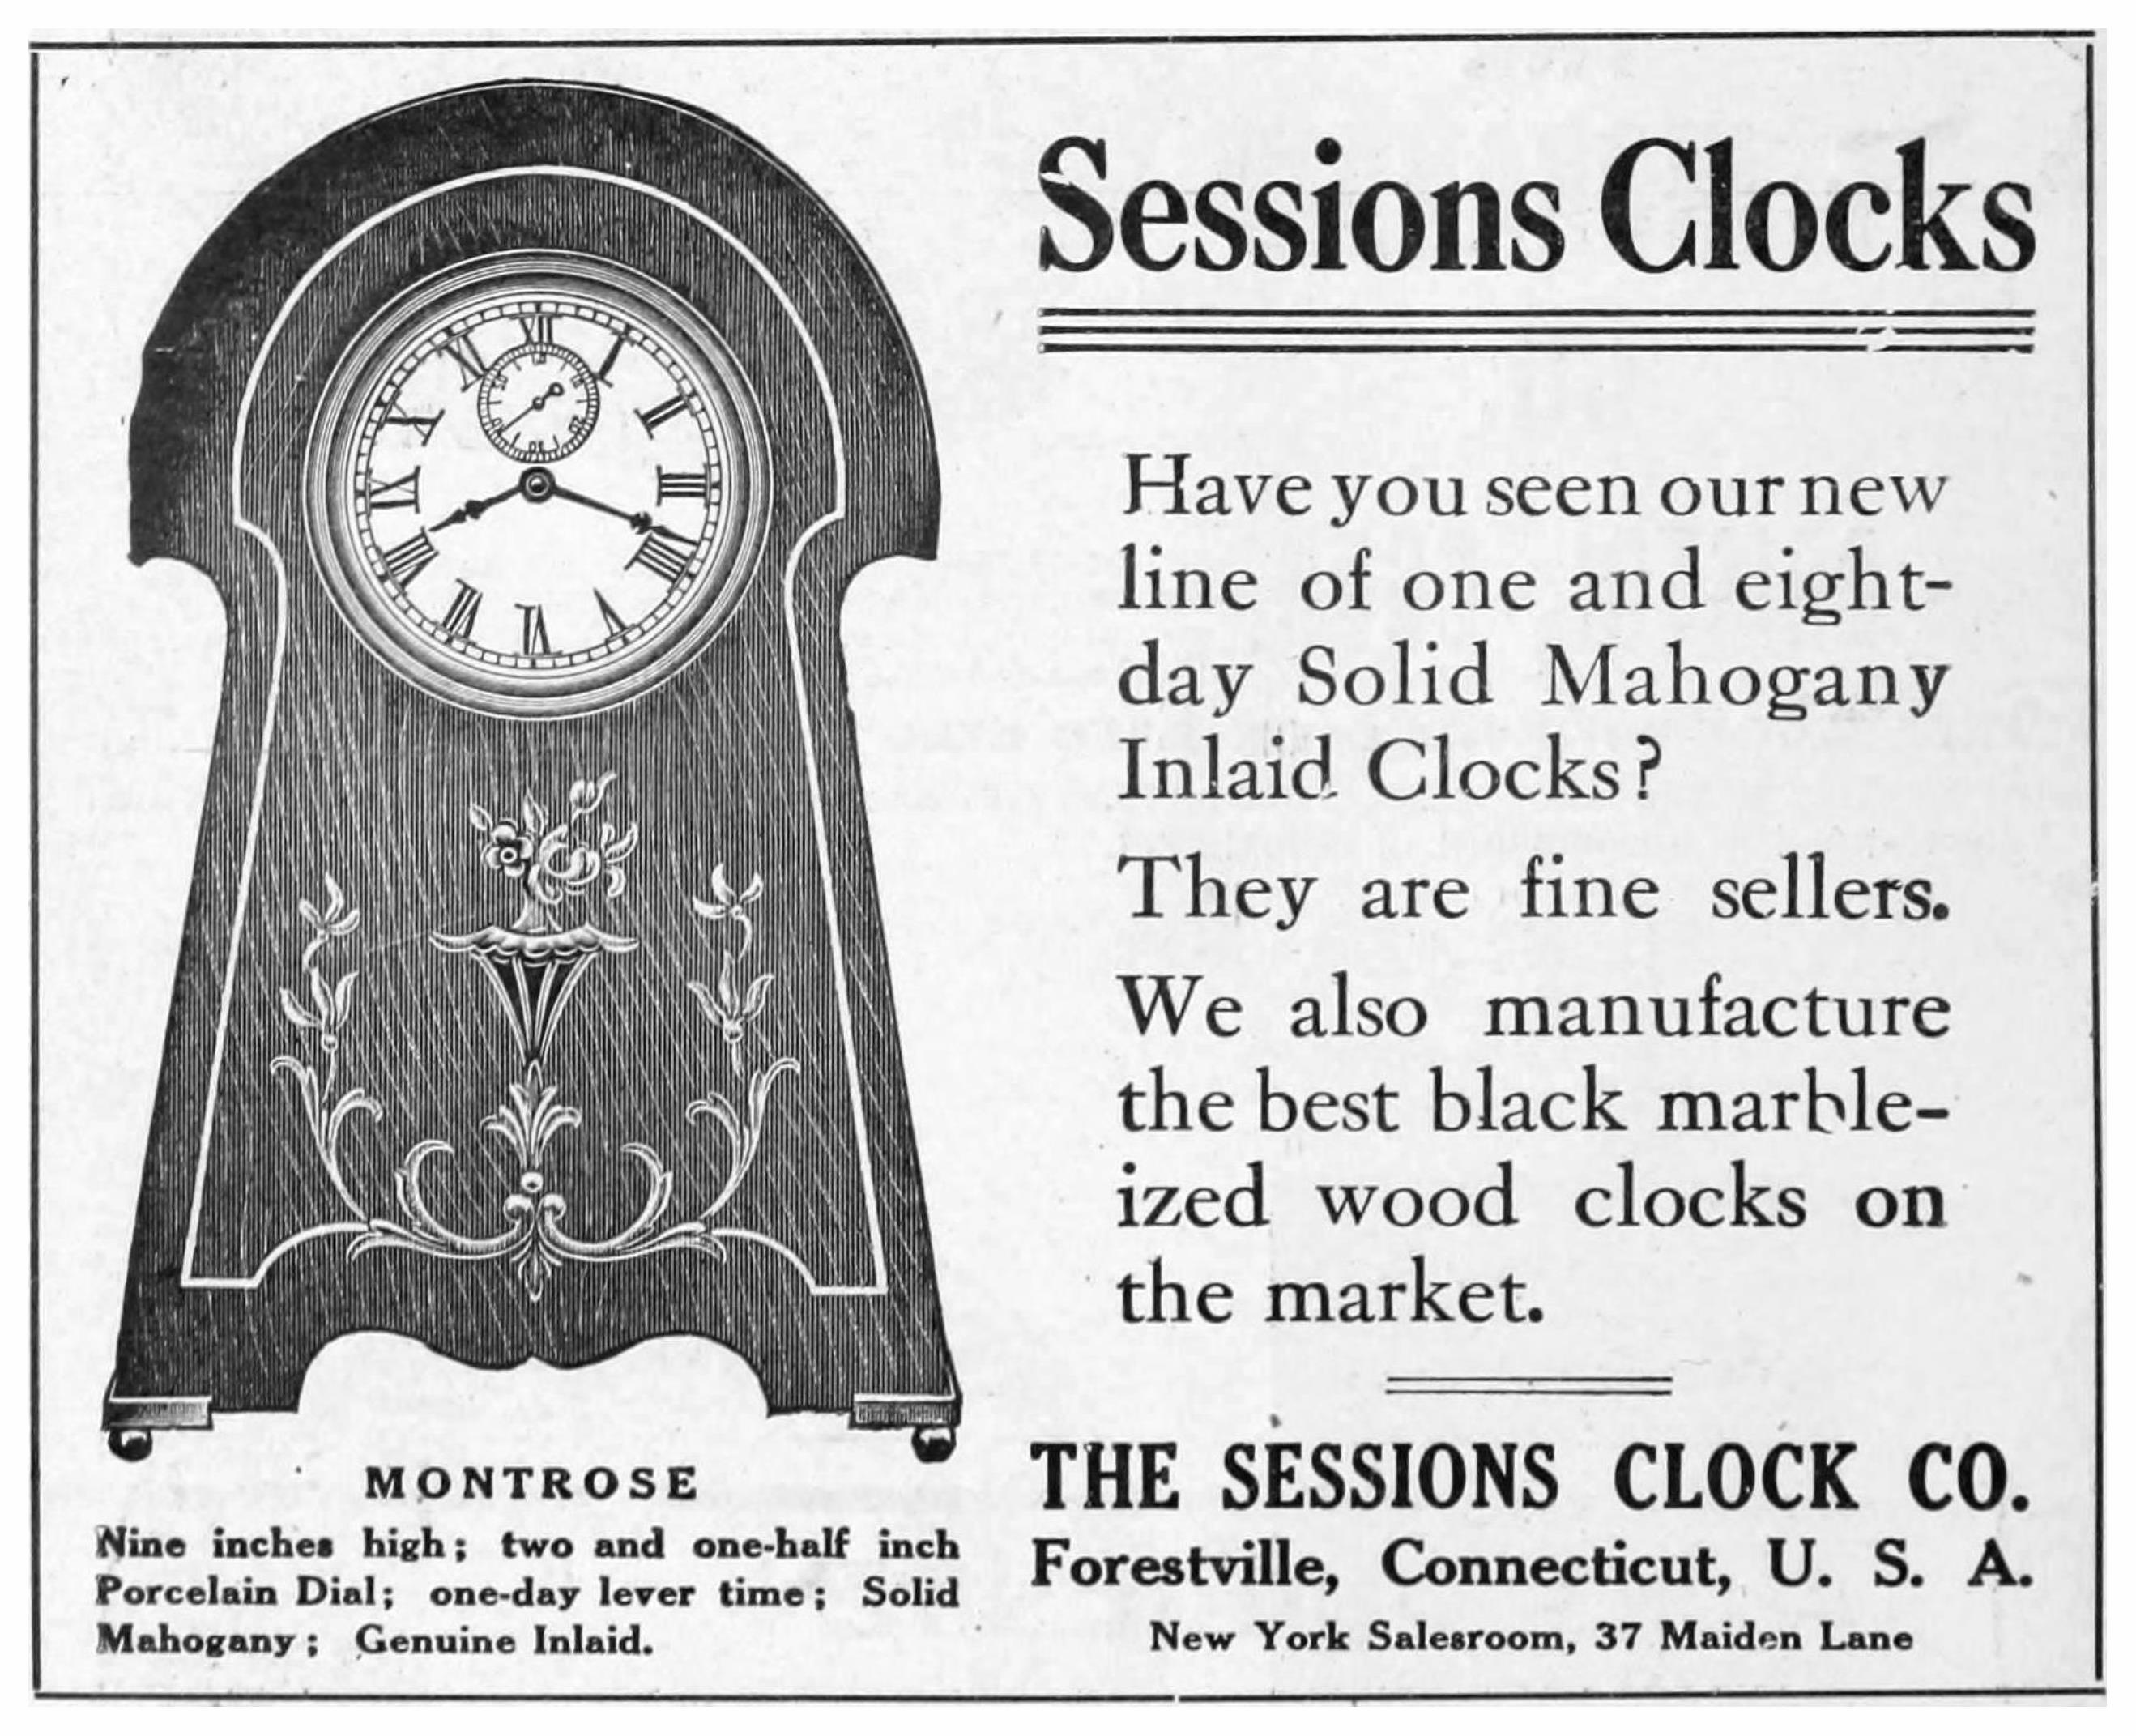 Sessions Clocks1909 10.jpg